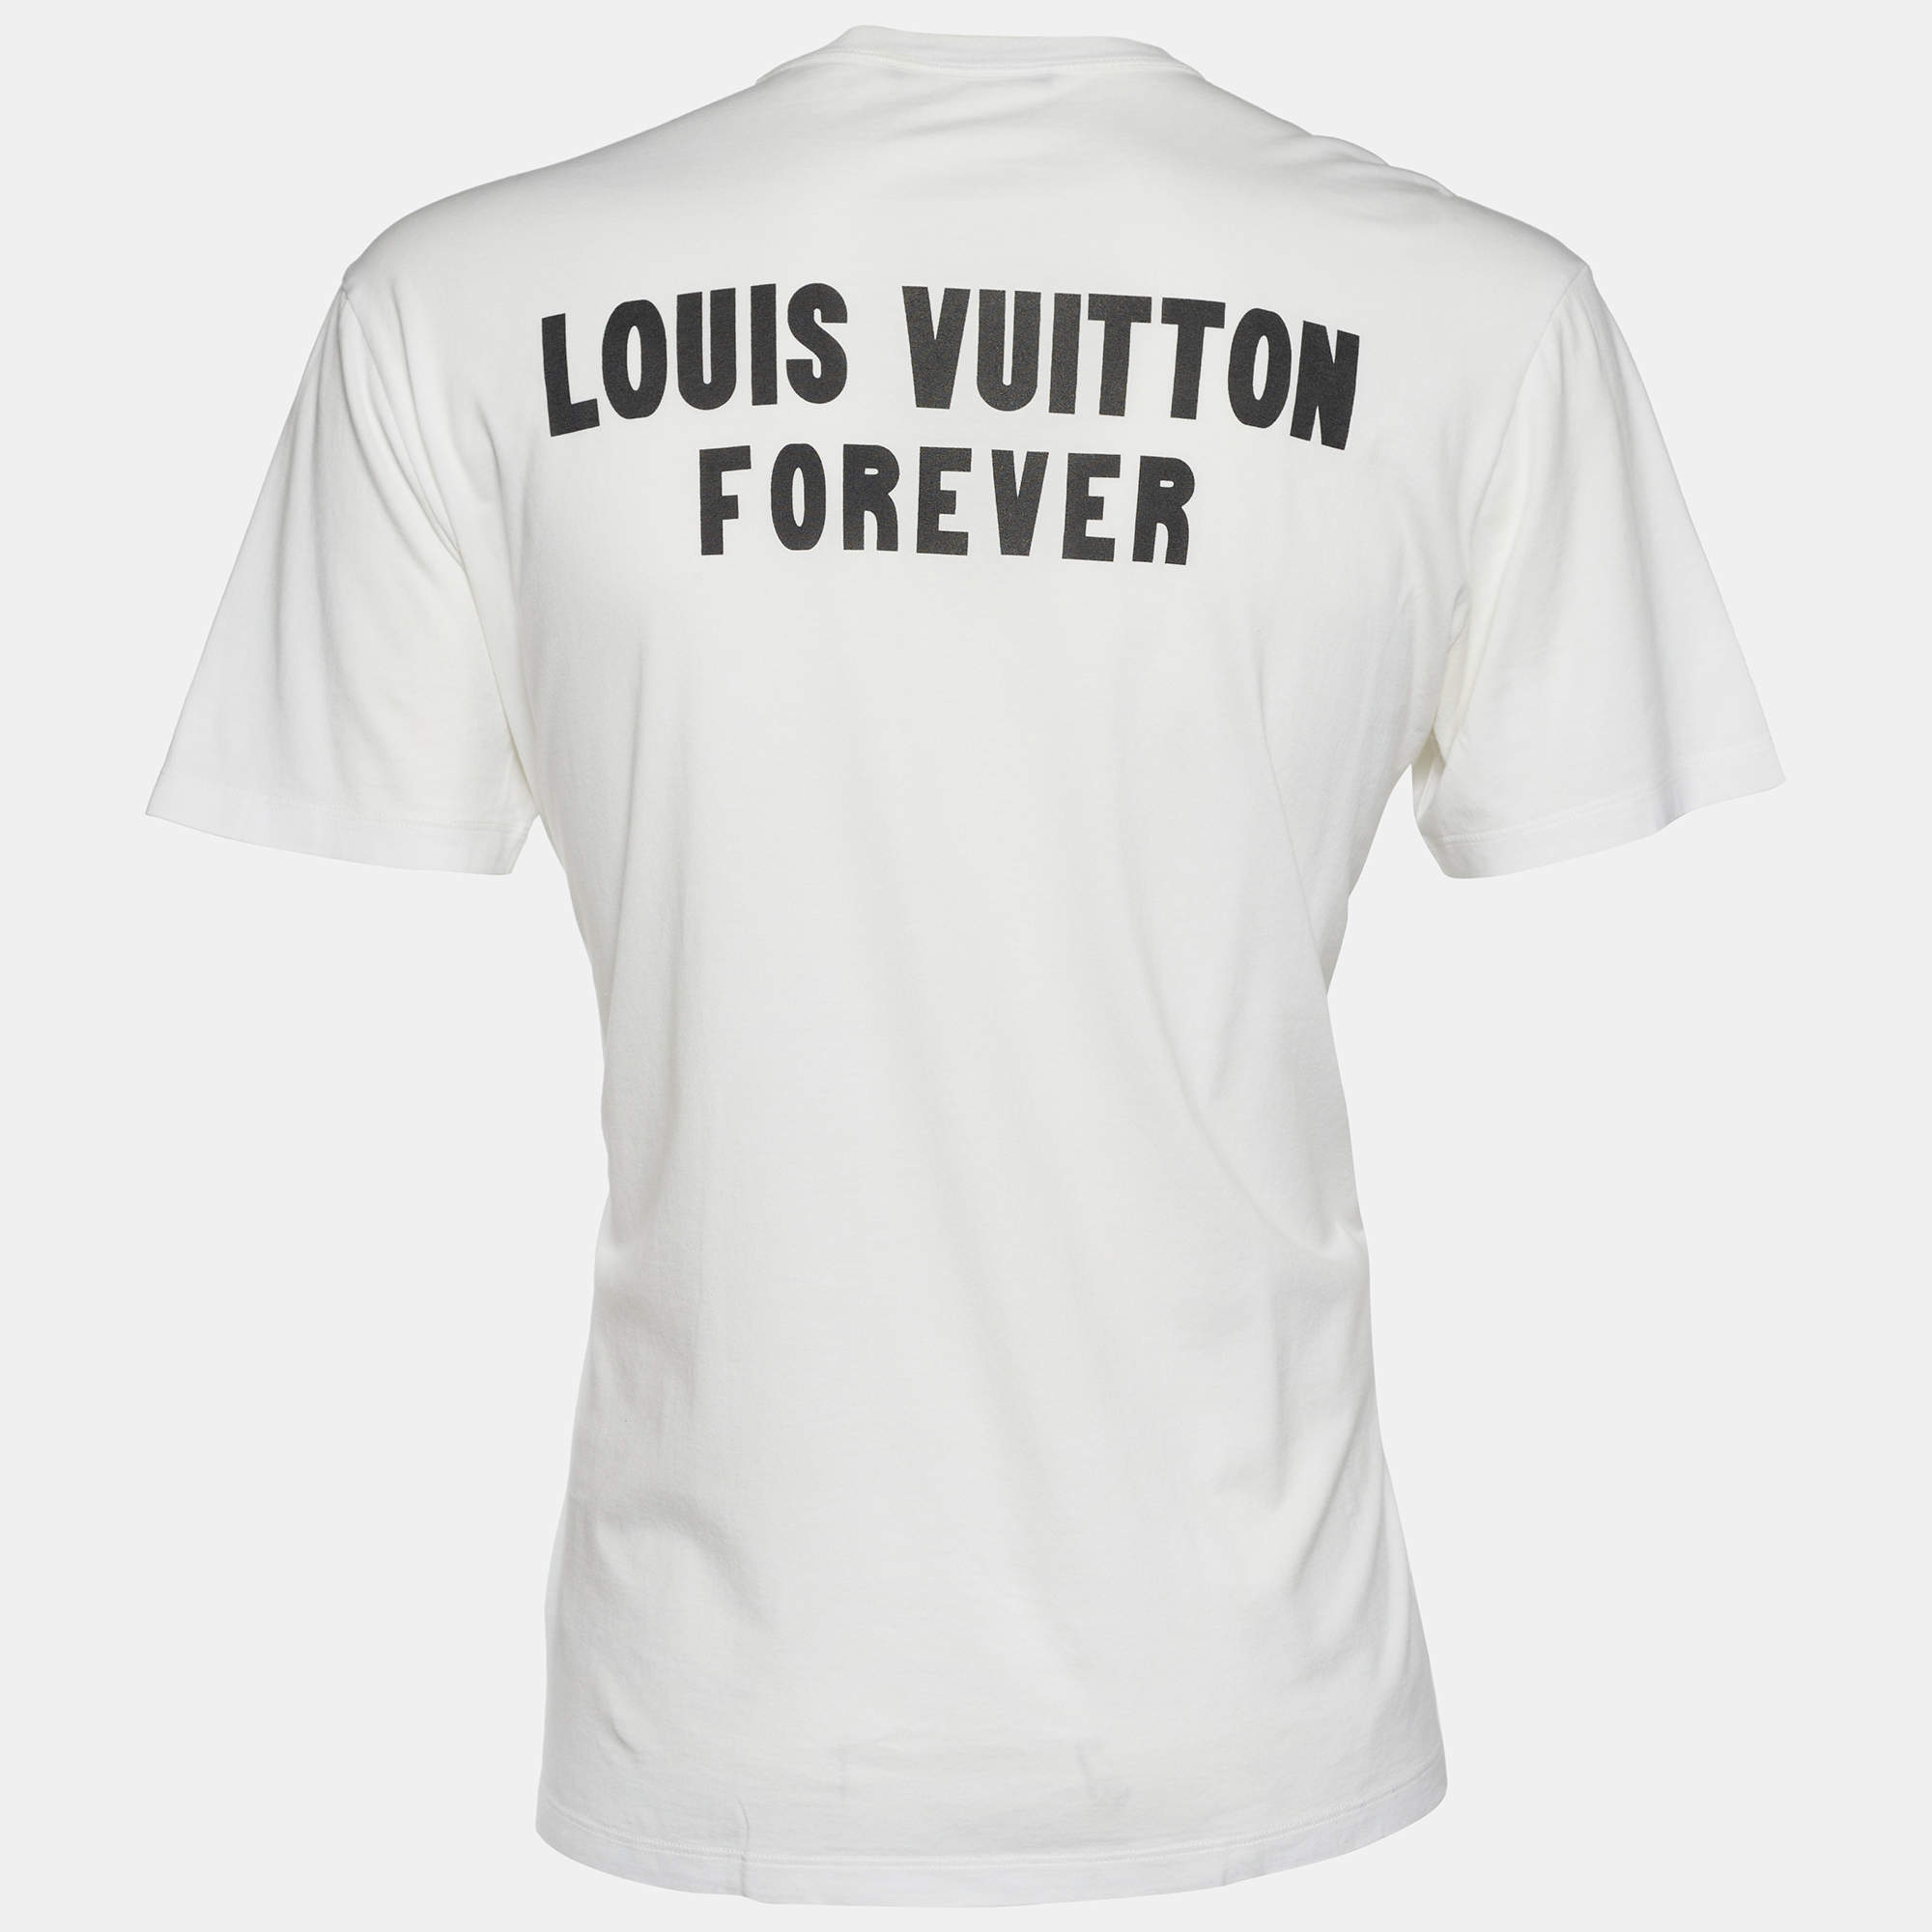 Louis Vuitton Upside Down Lv Logo Sweat Shirt Sweatshirt Parka Jersey mens